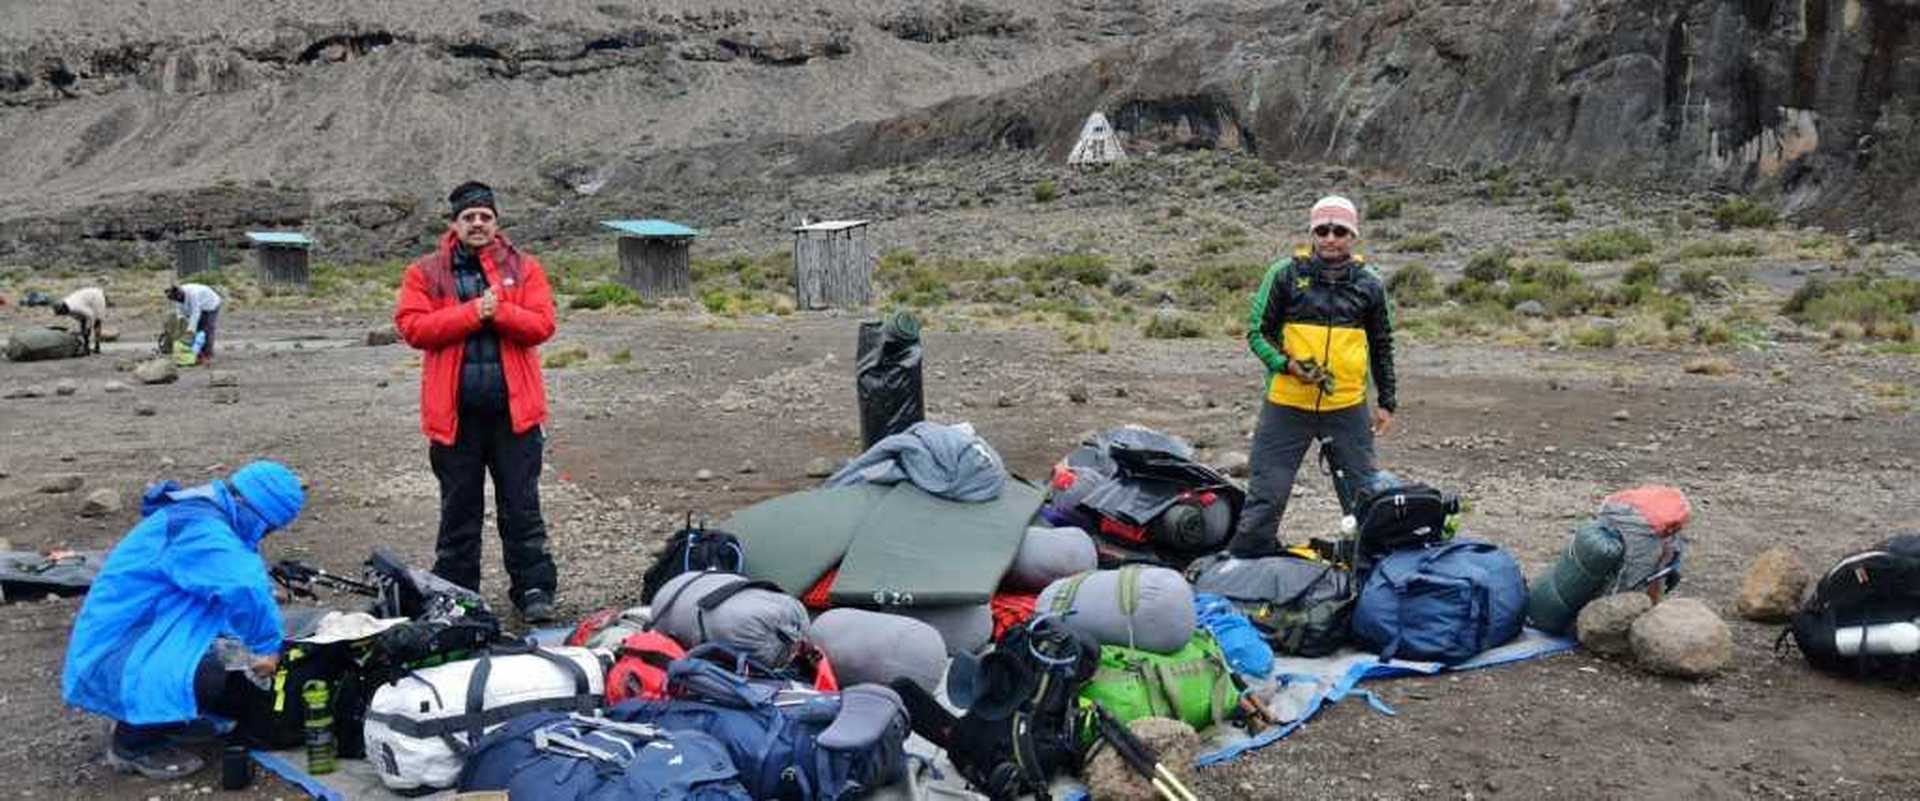 Kilimanjaro gear list